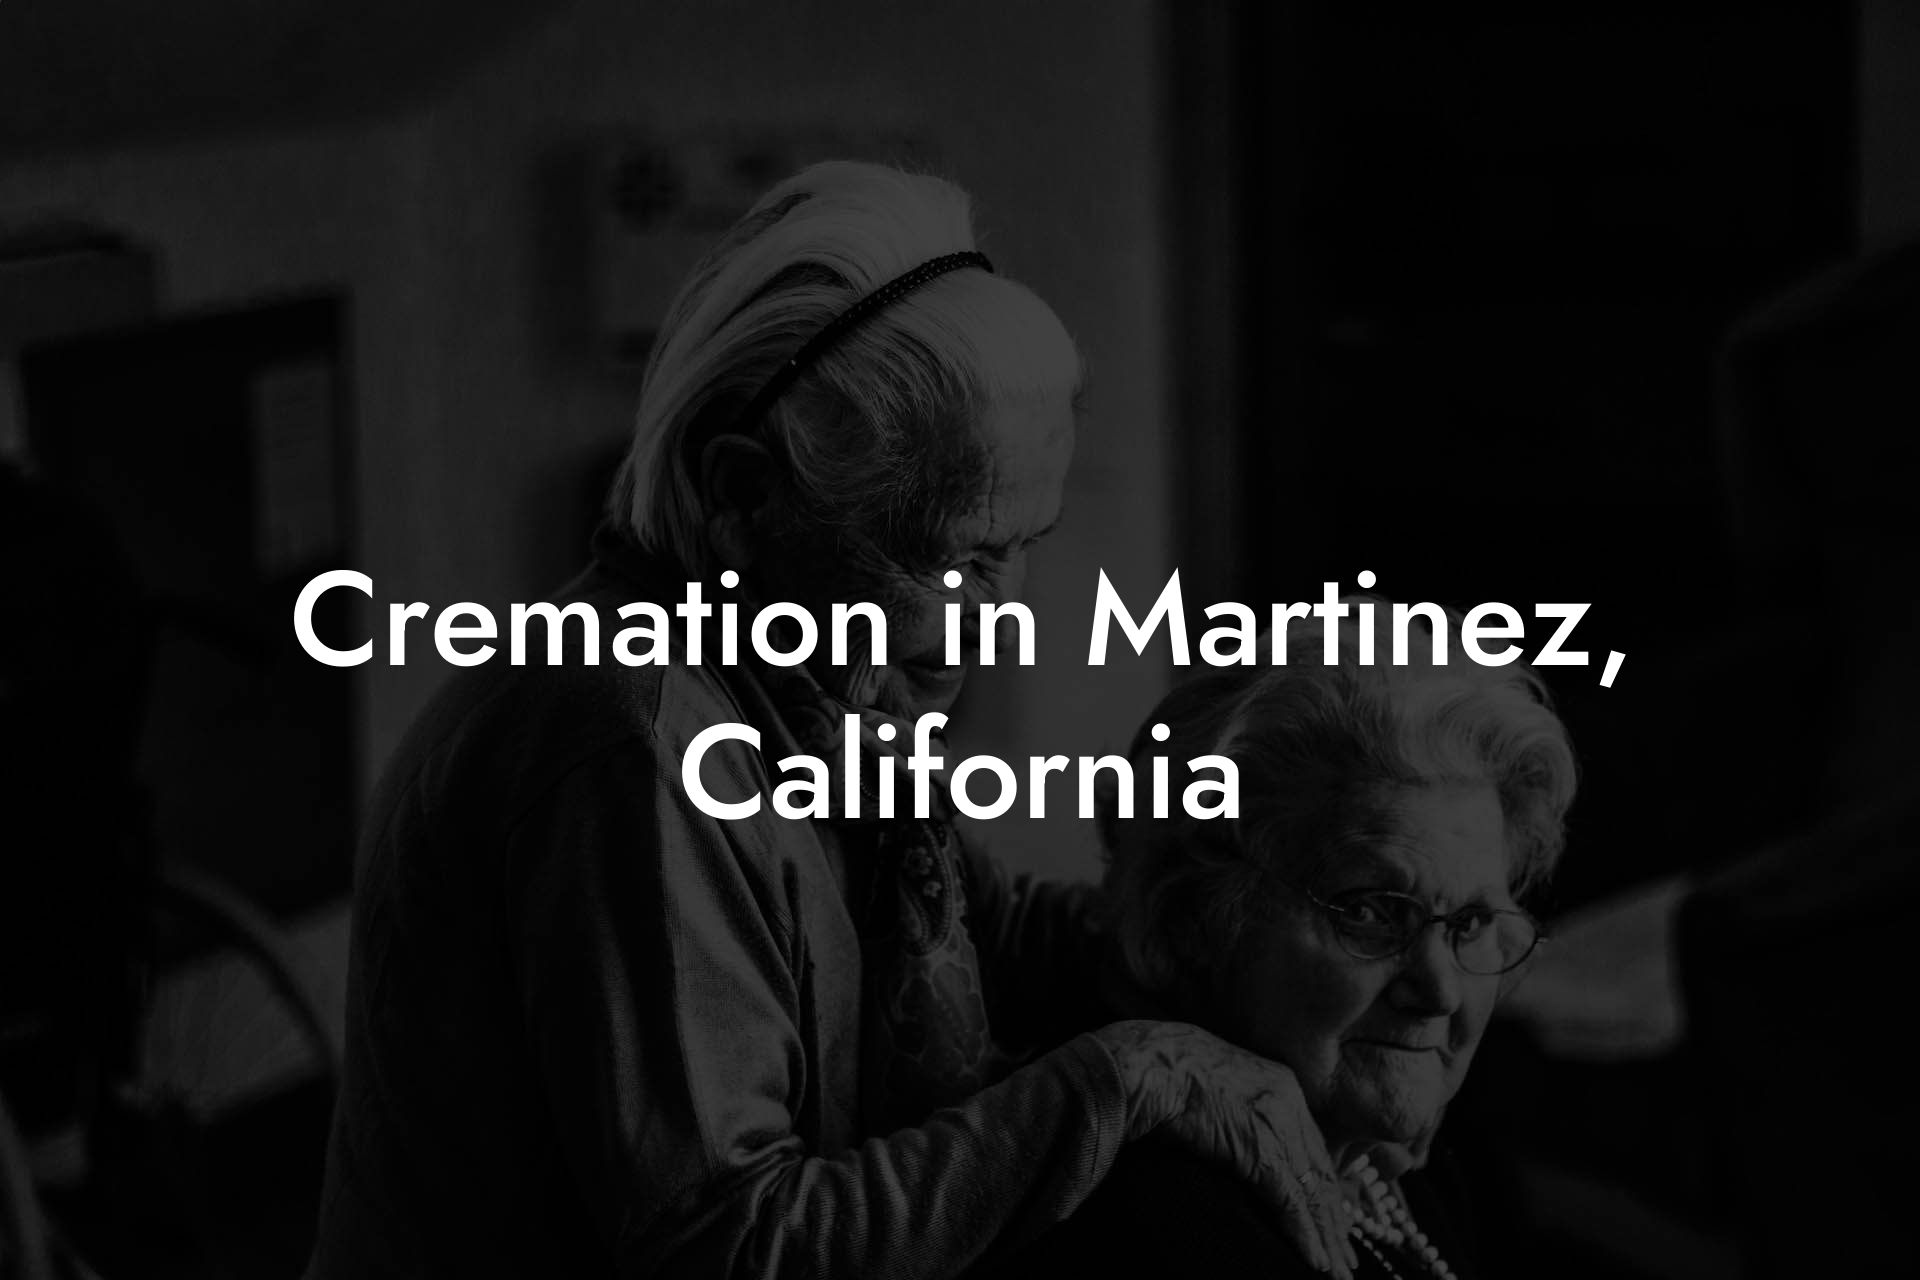 Cremation in Martinez, California